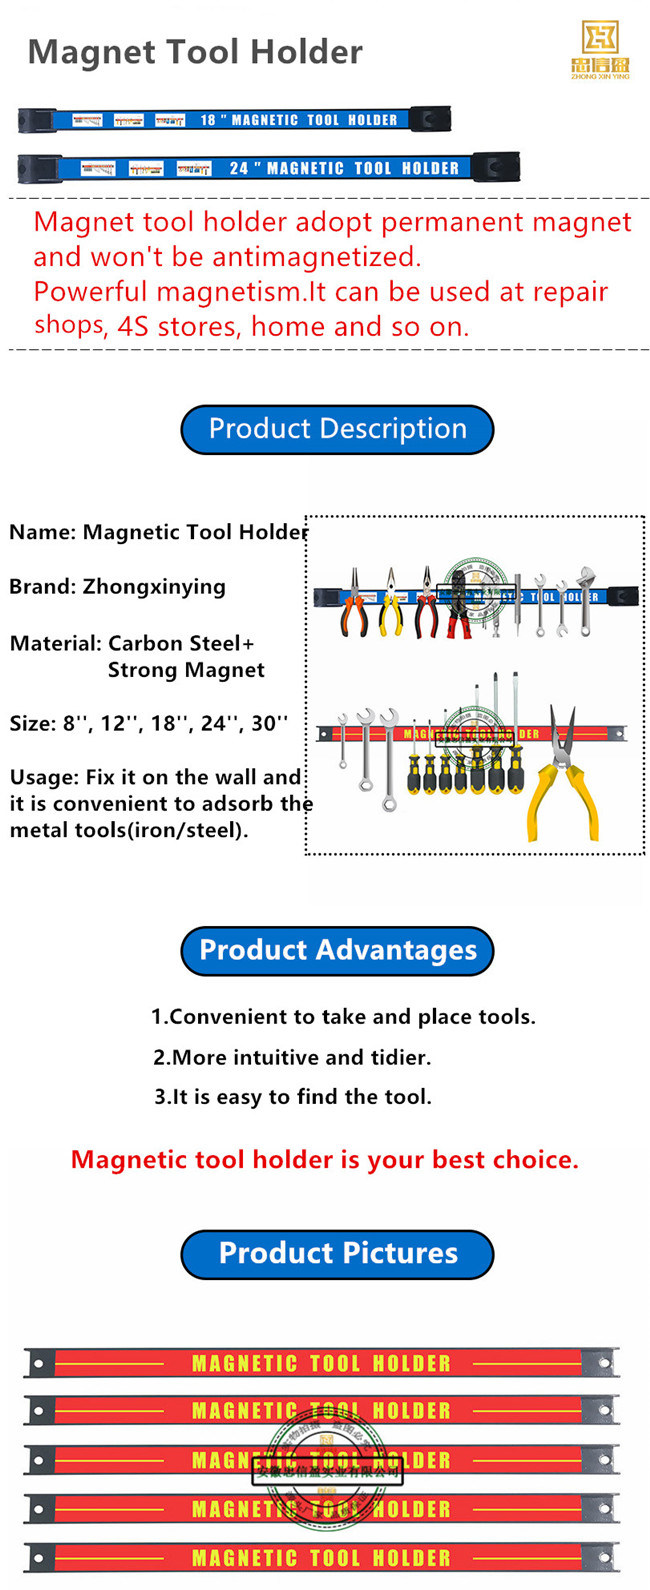 Magnetic Tools Holder with Neodymium Iron Boron Magnet